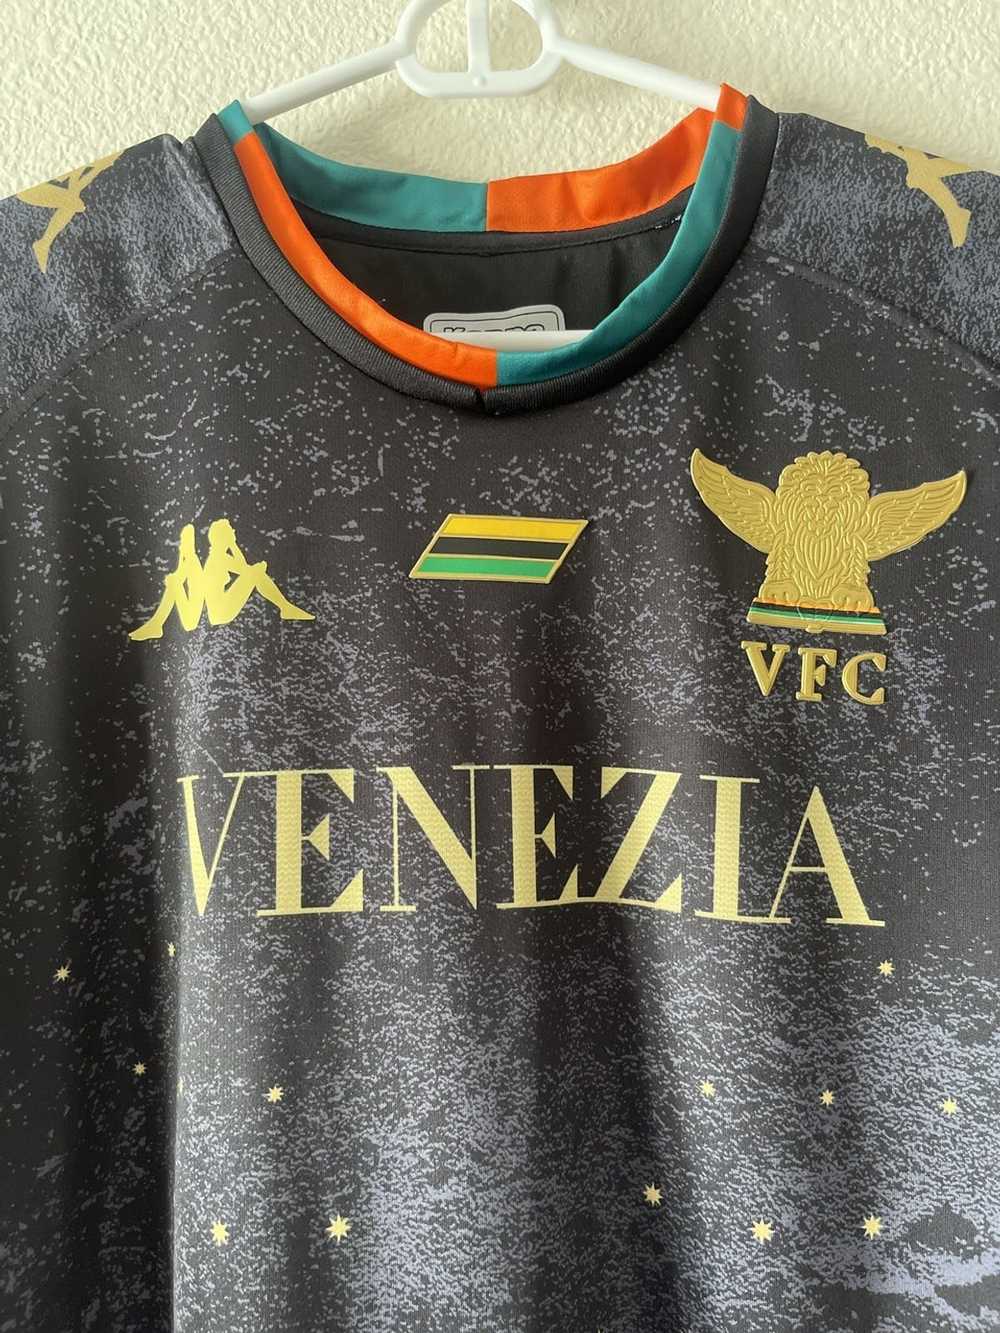 Kappa Venezia FC Soccer Jersey - image 2